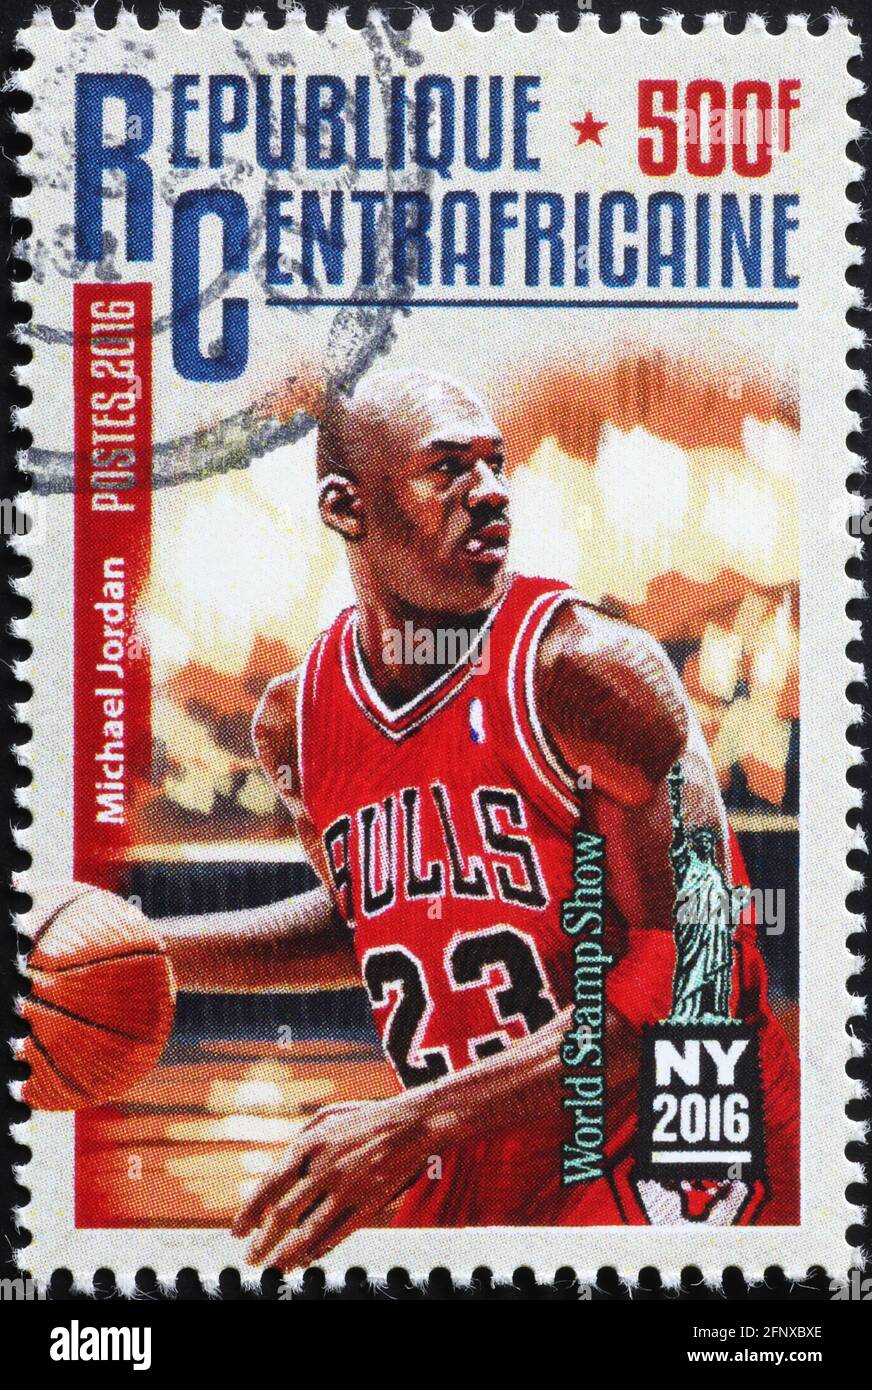 Michael Jordan on african postage stamp Stock Photo